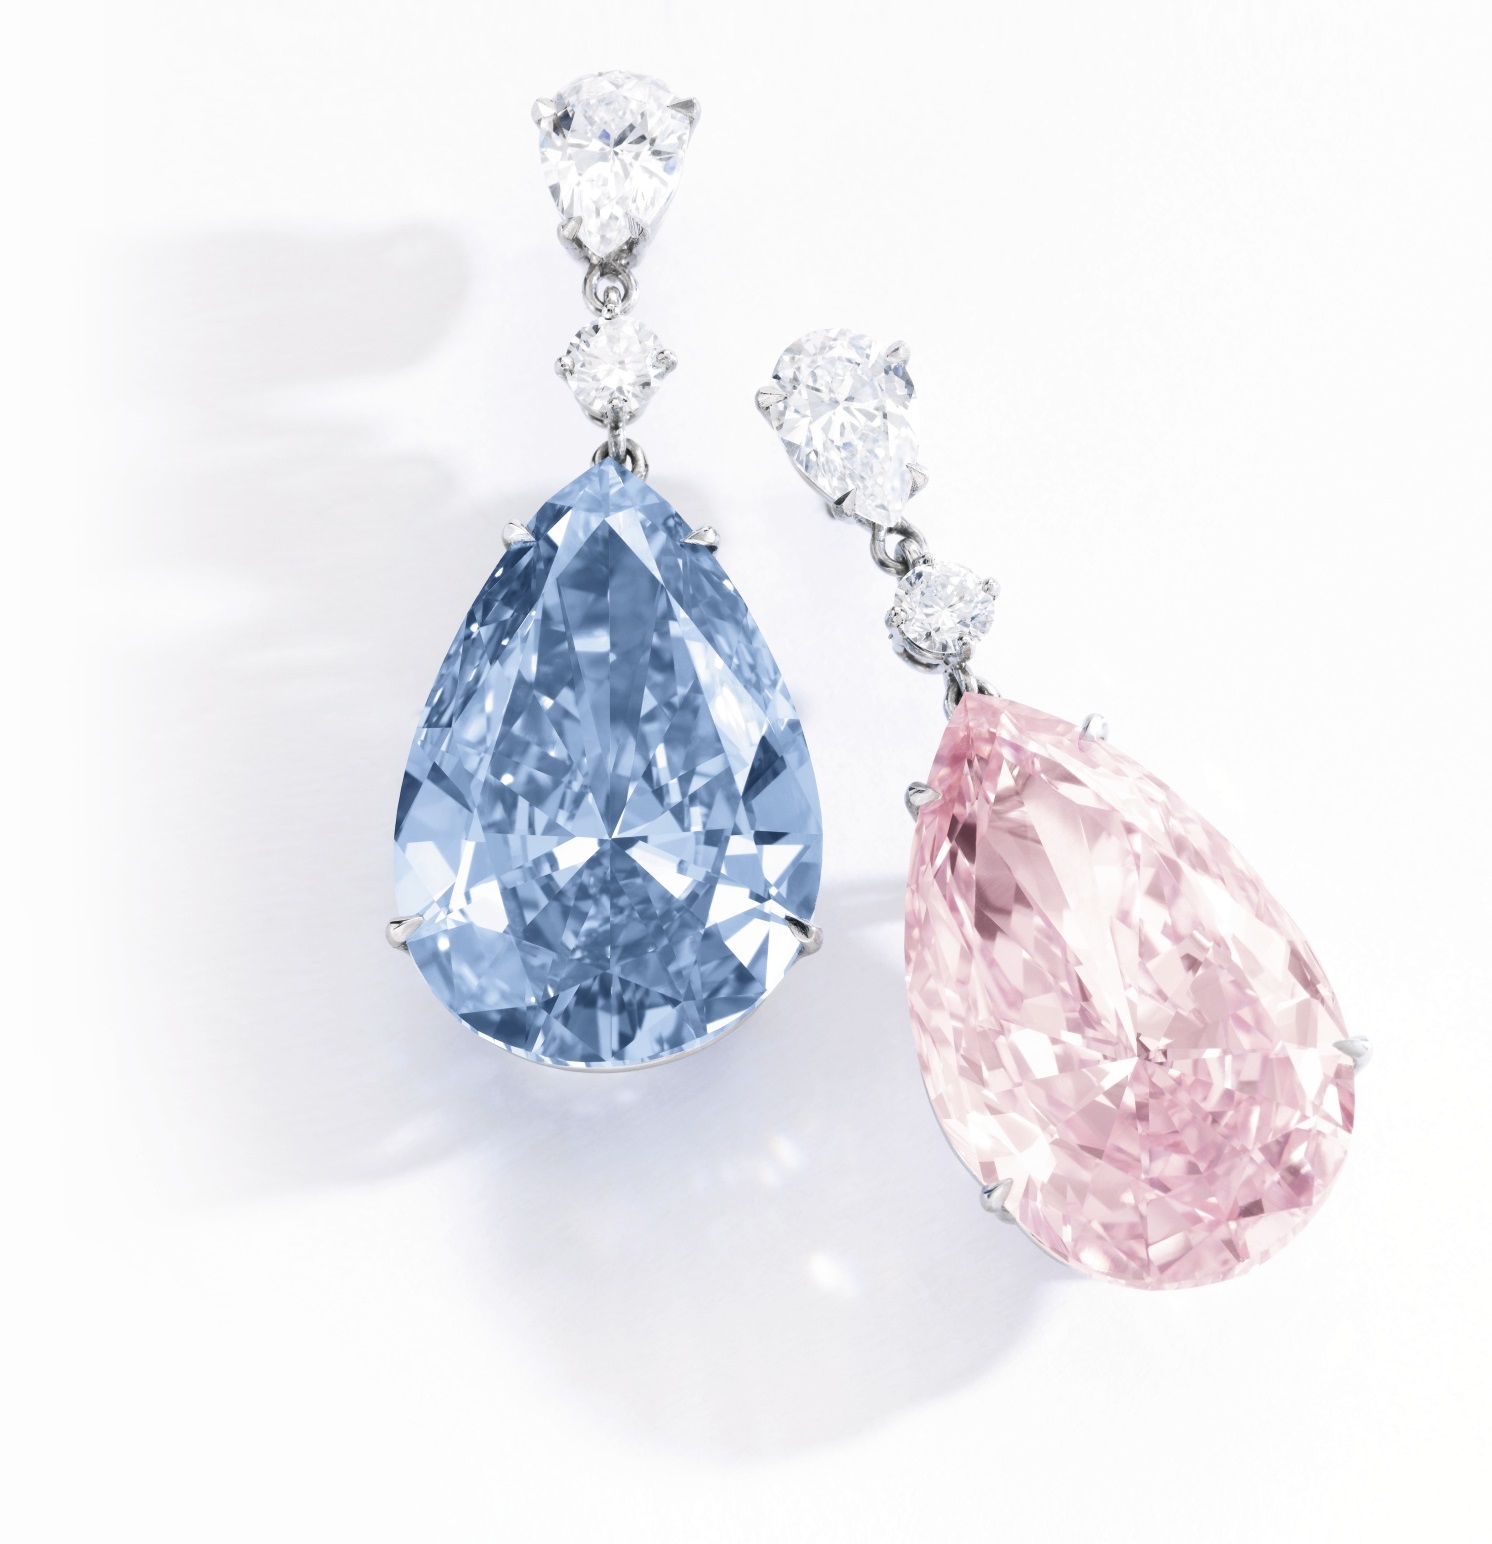 16-carat, pear-shaped Artemis Pink + 14.54 carat, pear-shaped Apollo Blue